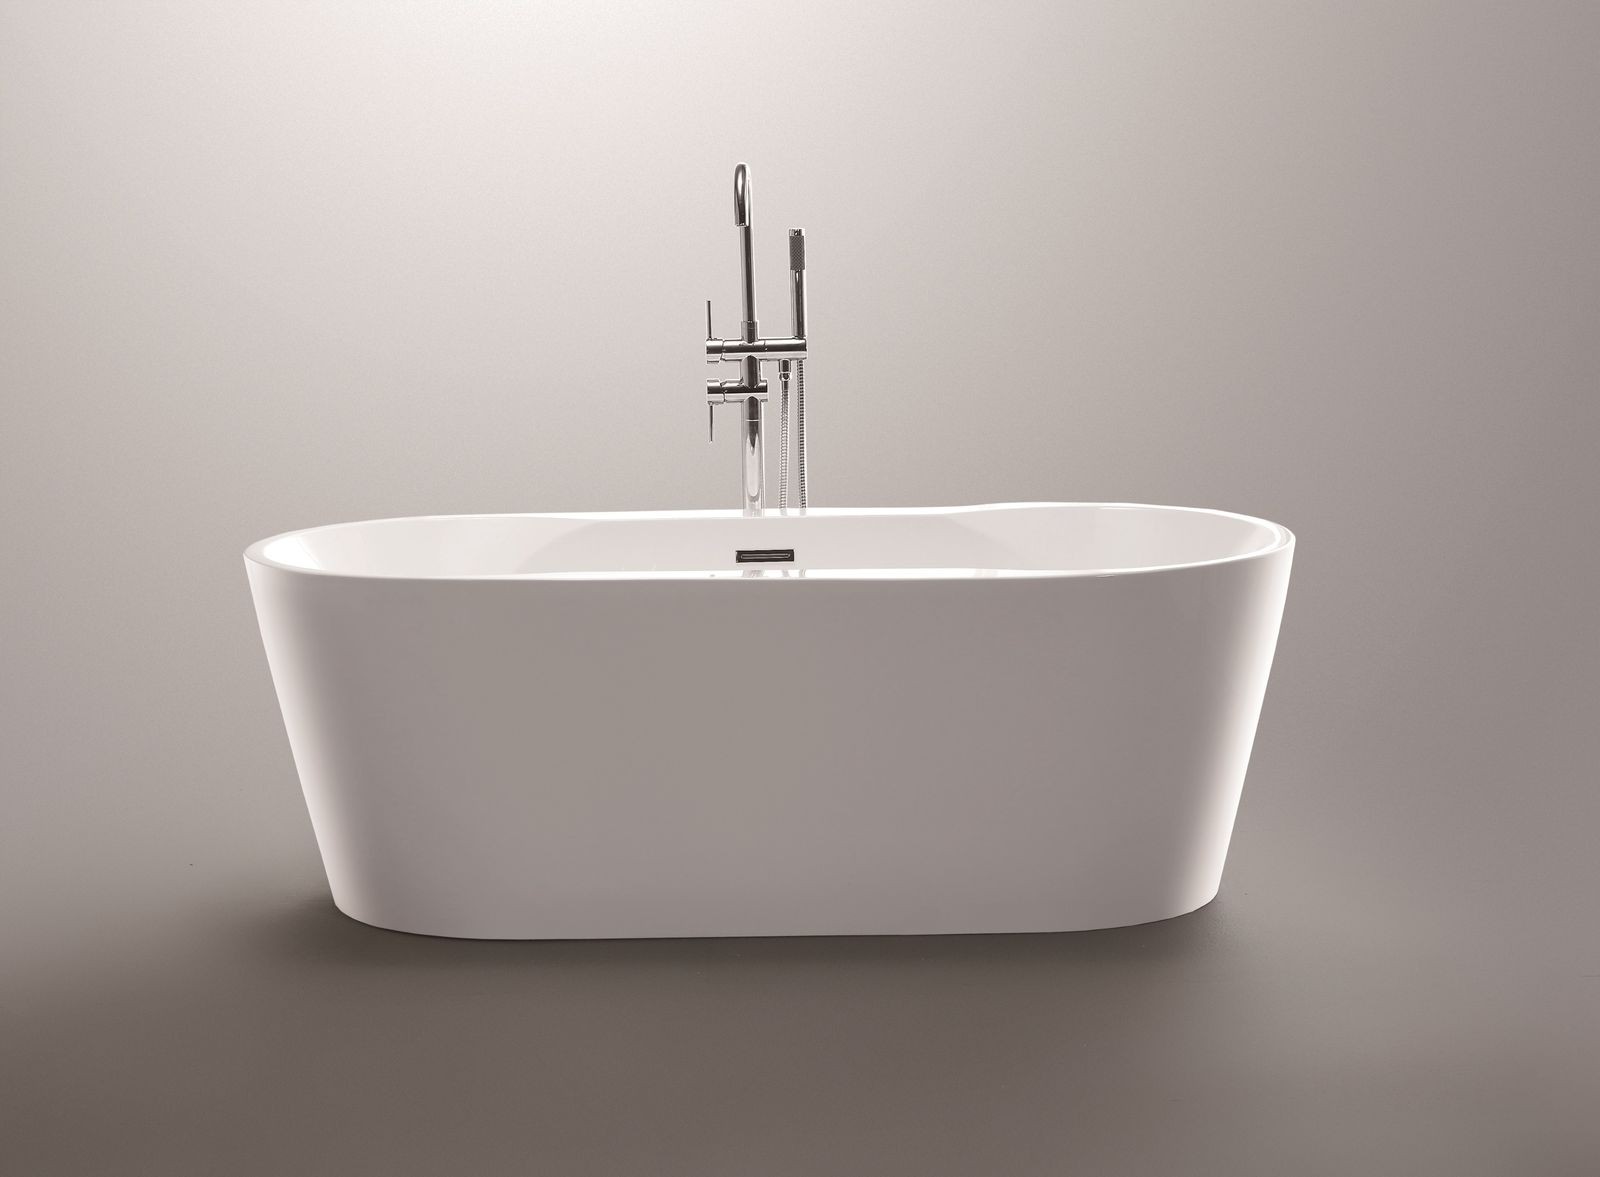 VANITY ART VA6804 66 7/8 INCH FREESTANDING ACRYLIC SOAKING BATHTUB WITH ROUND OVERFLOW AND POP-UP DRAIN - WHITE